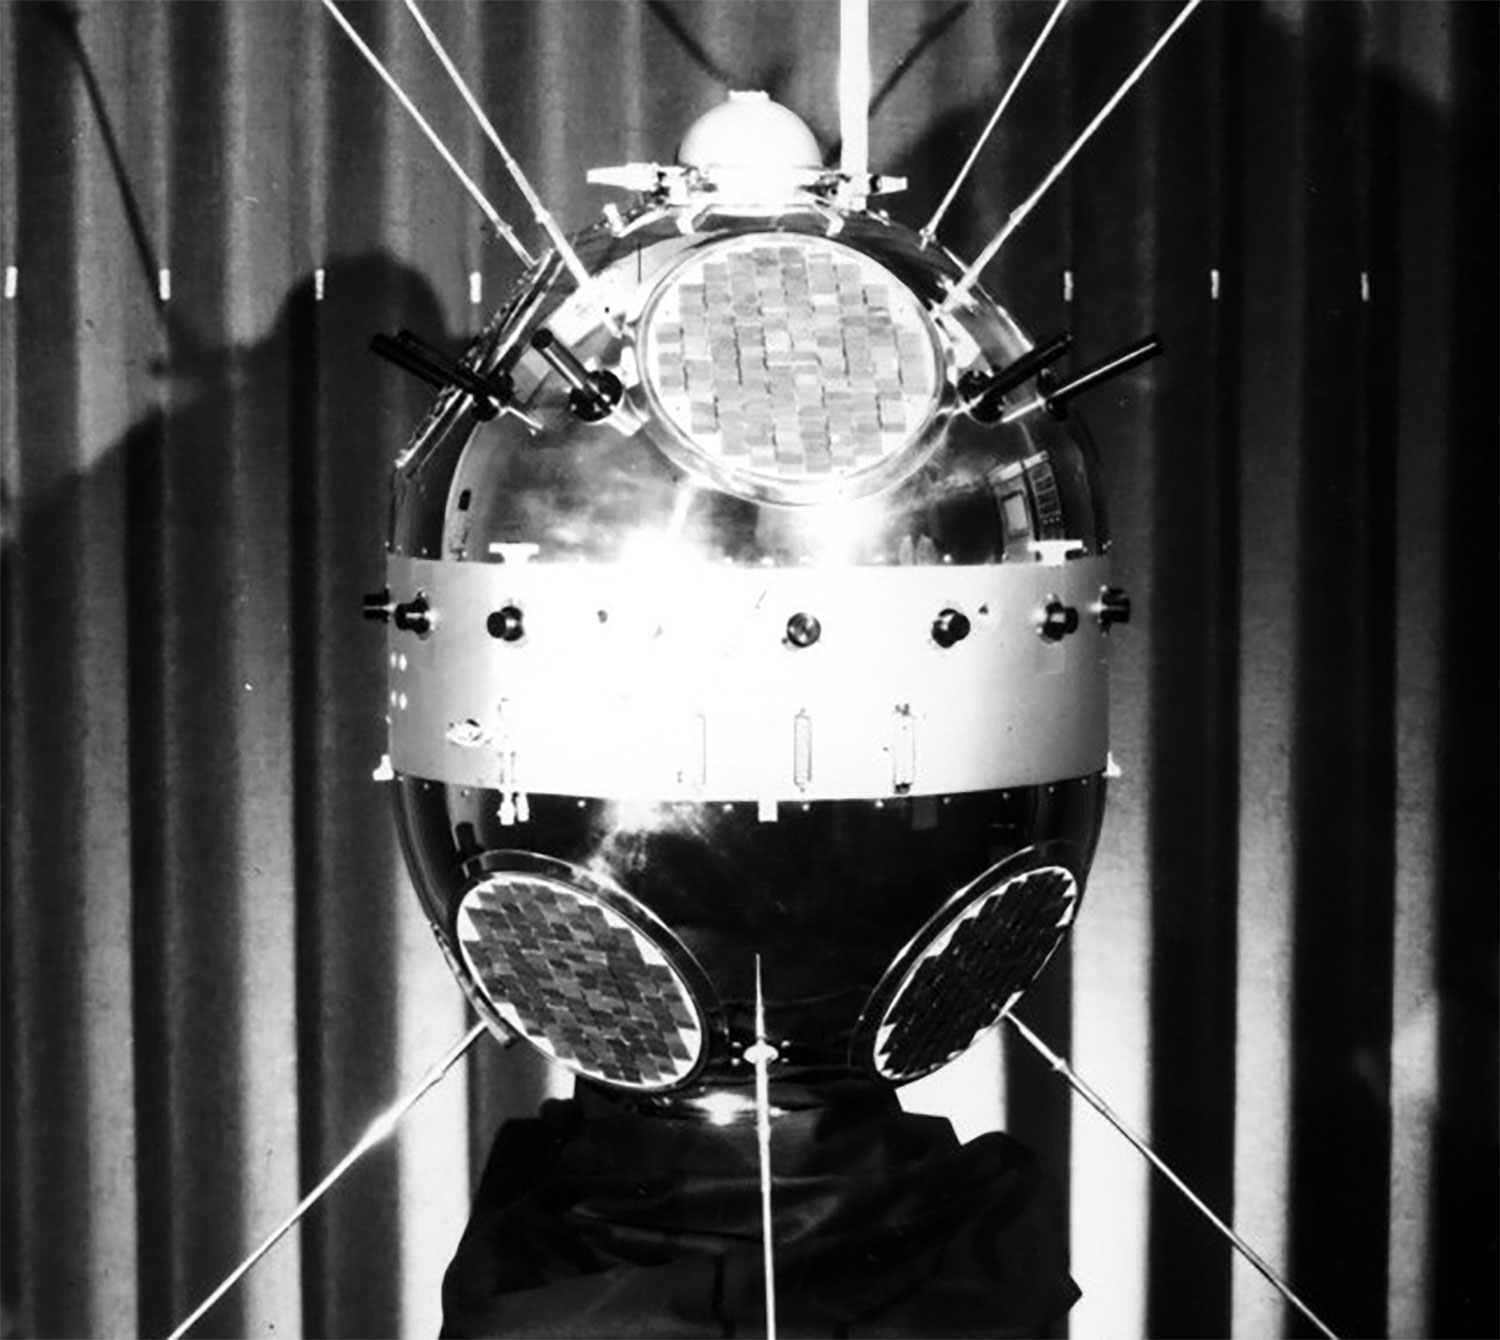 The Poppy reconnaissance satellite